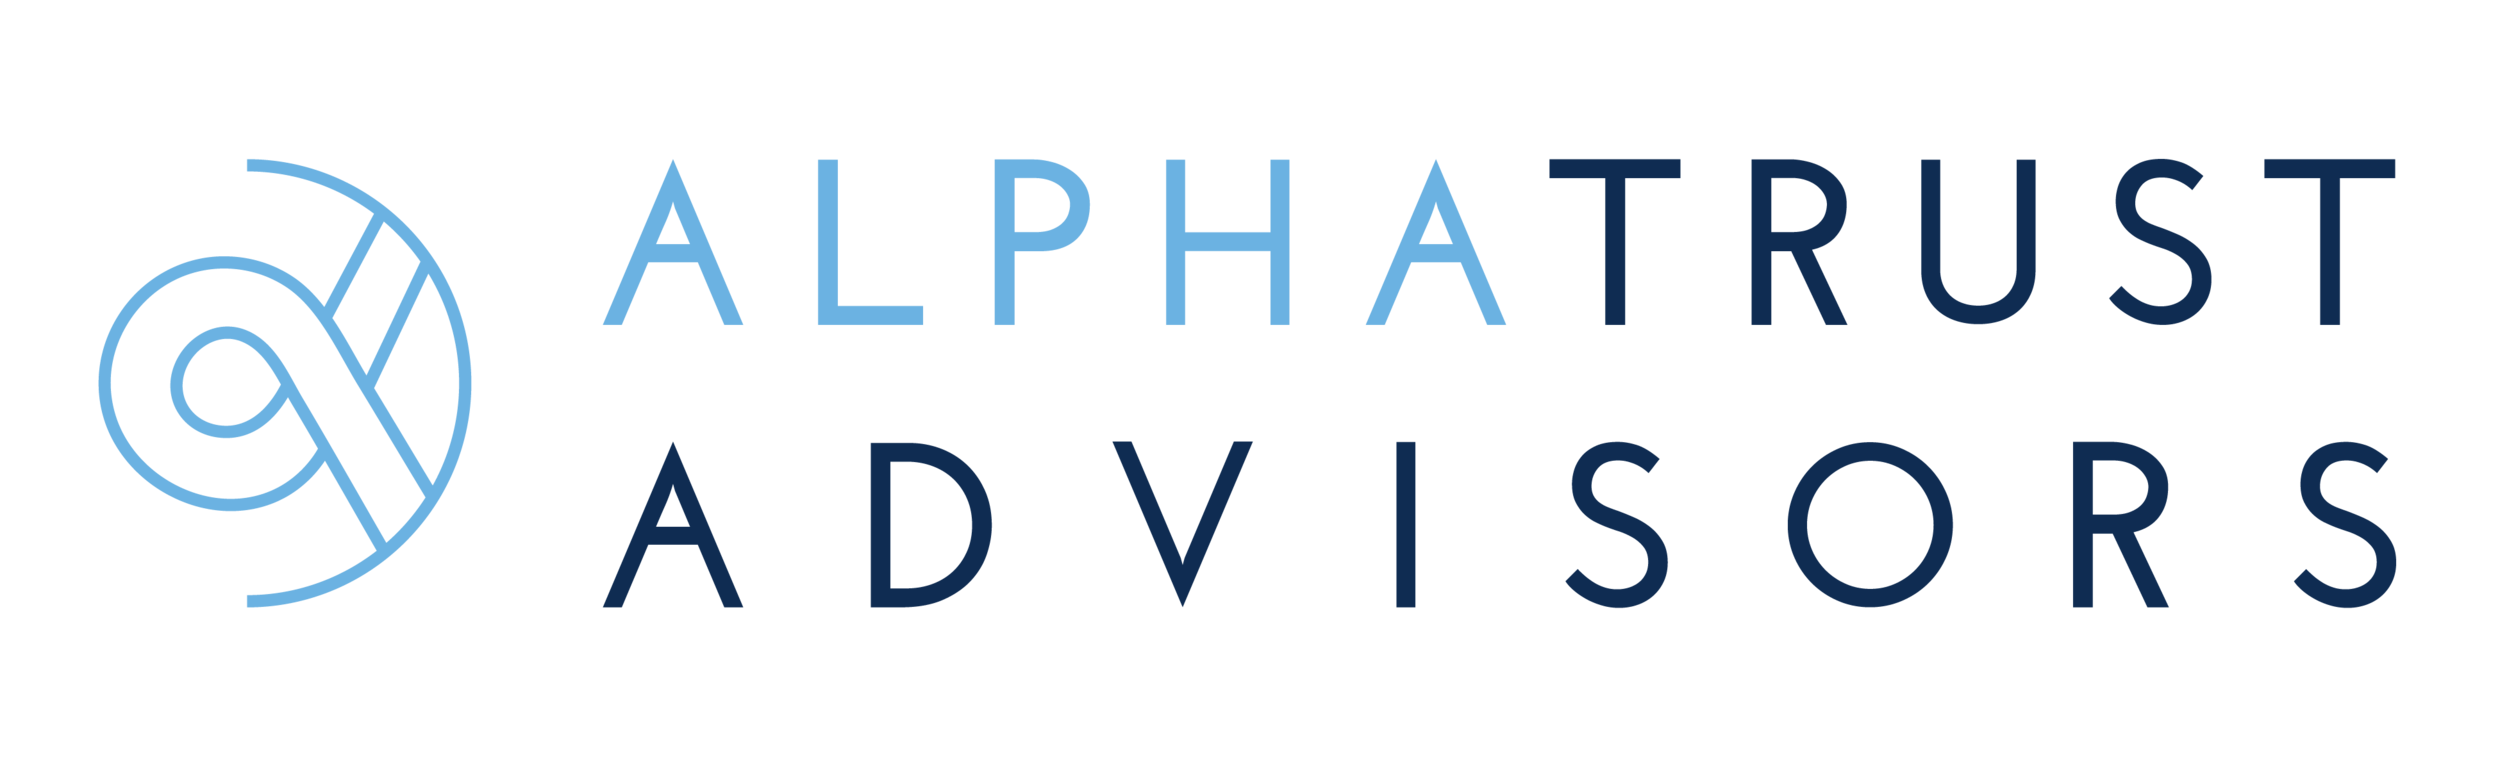 AlphaTrust Advisors